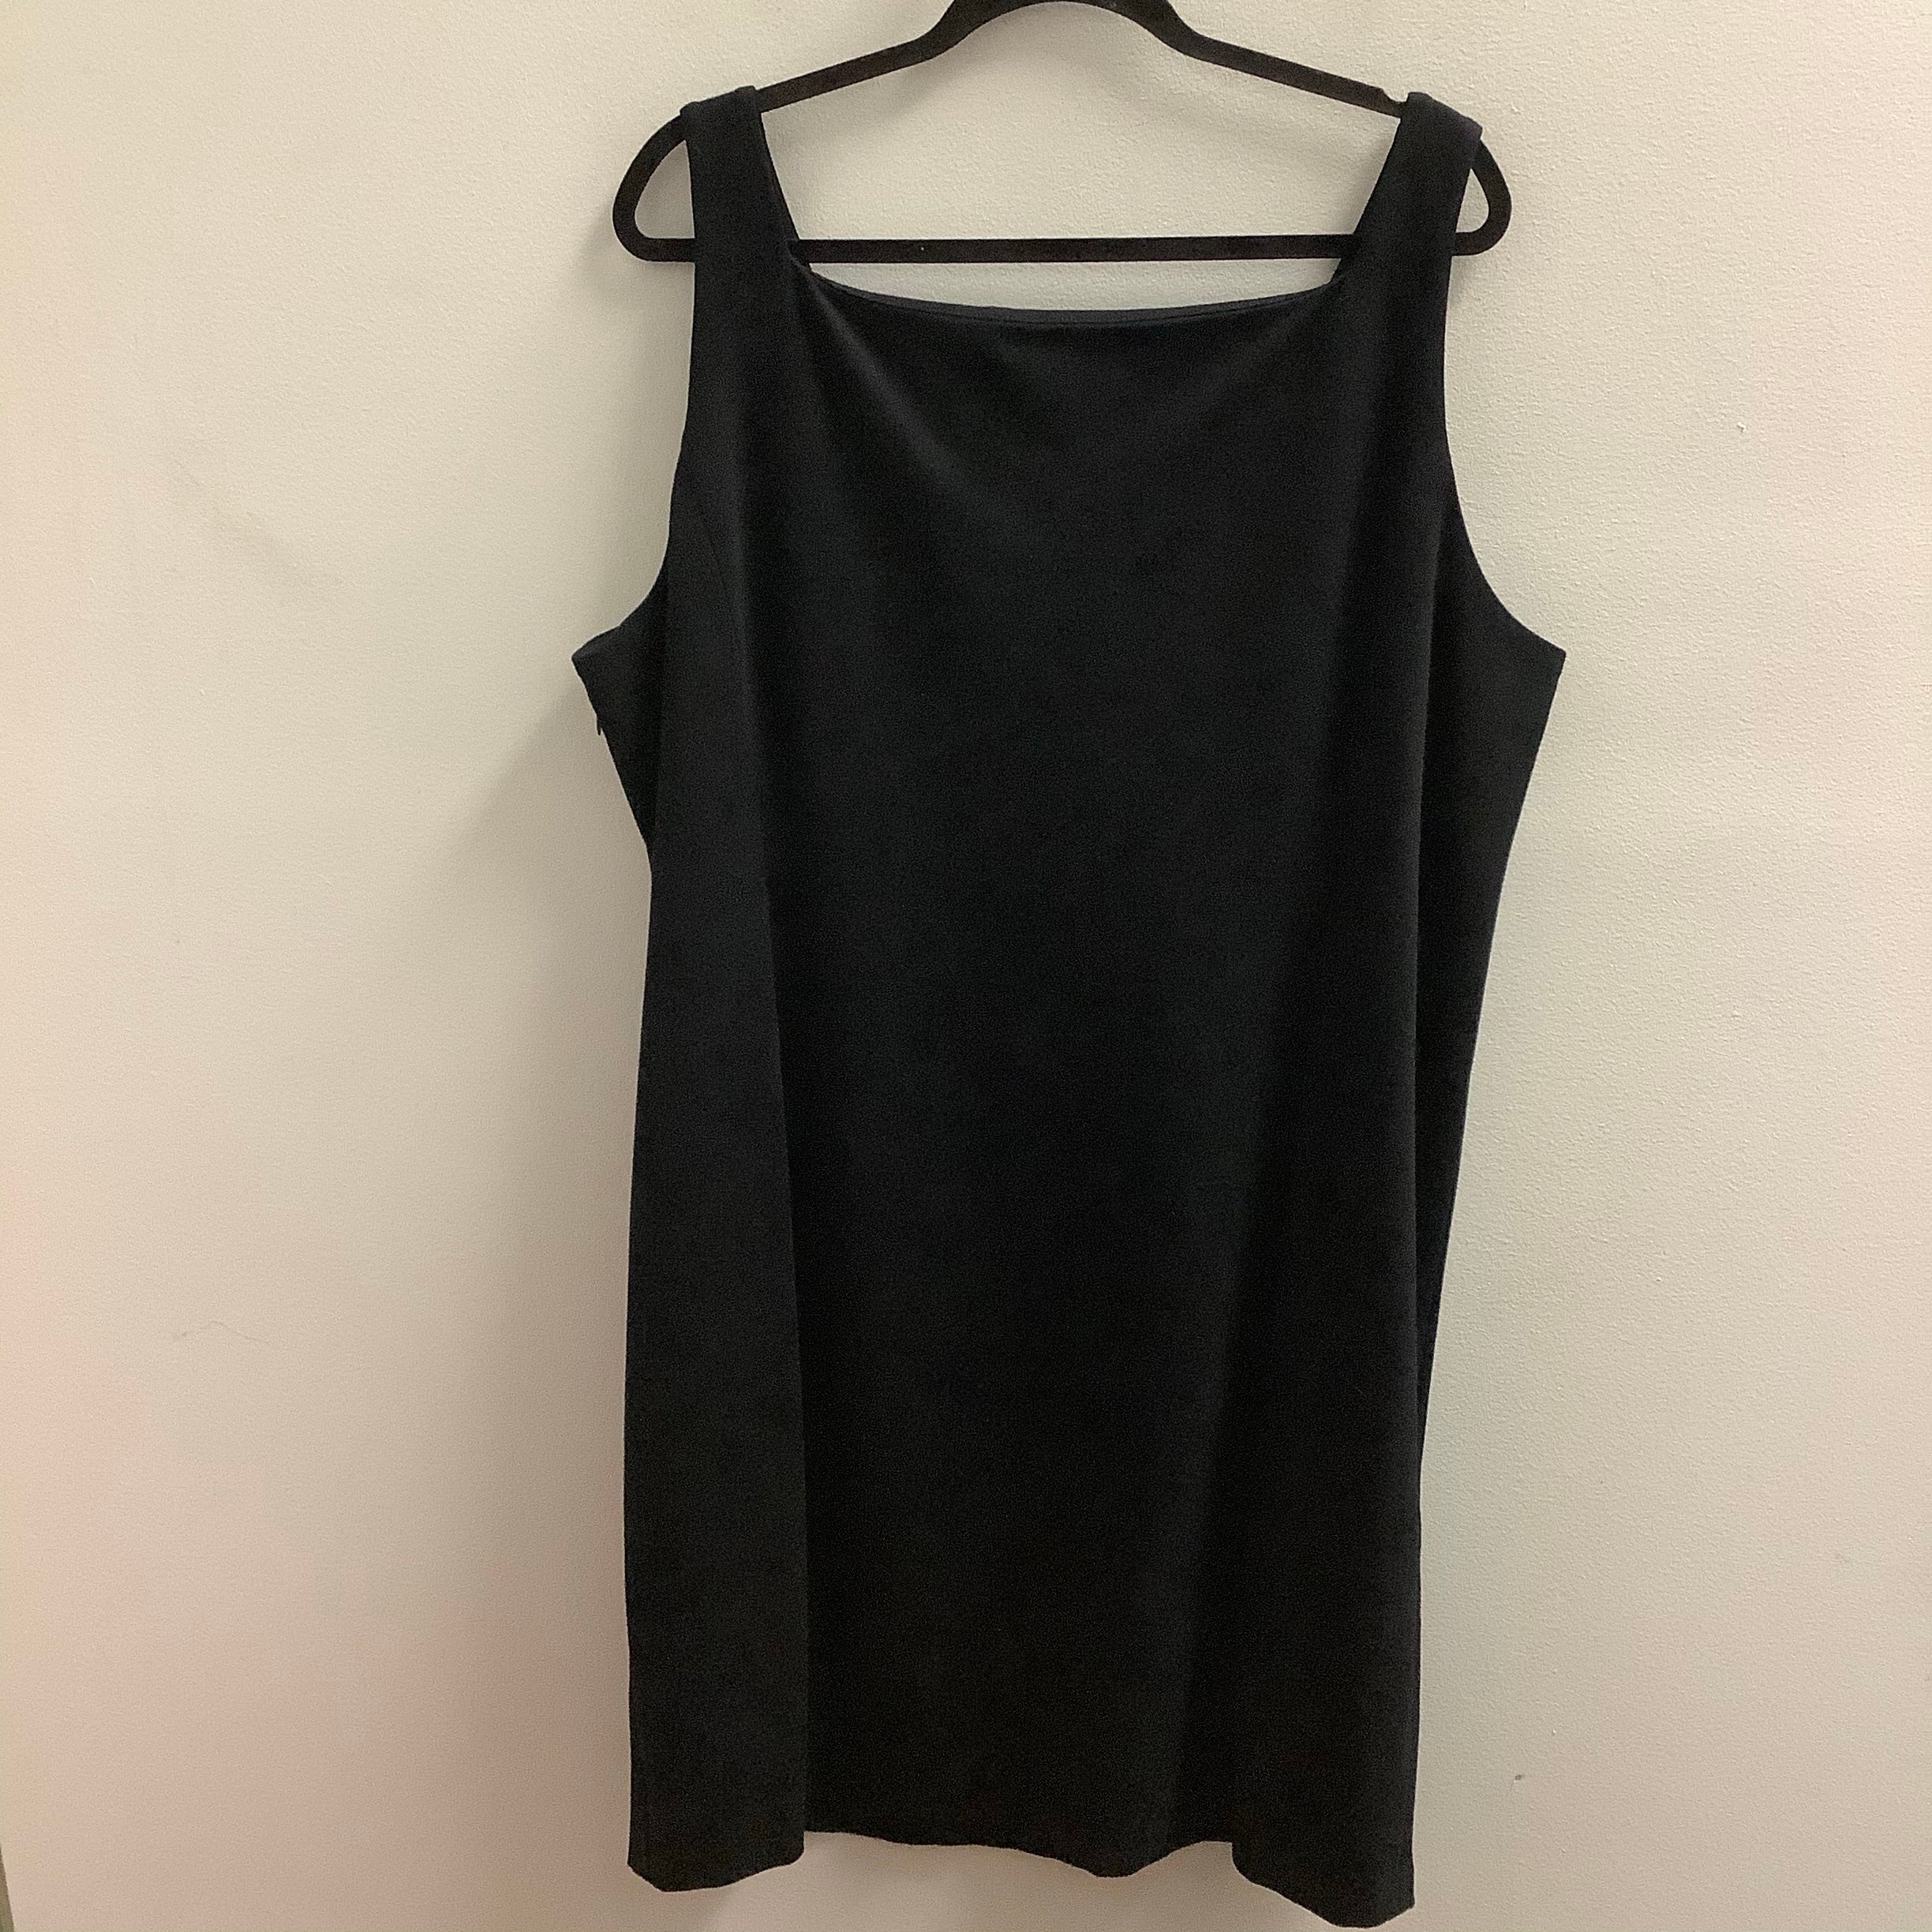 Eileen Fisher Black Dress Size 2X